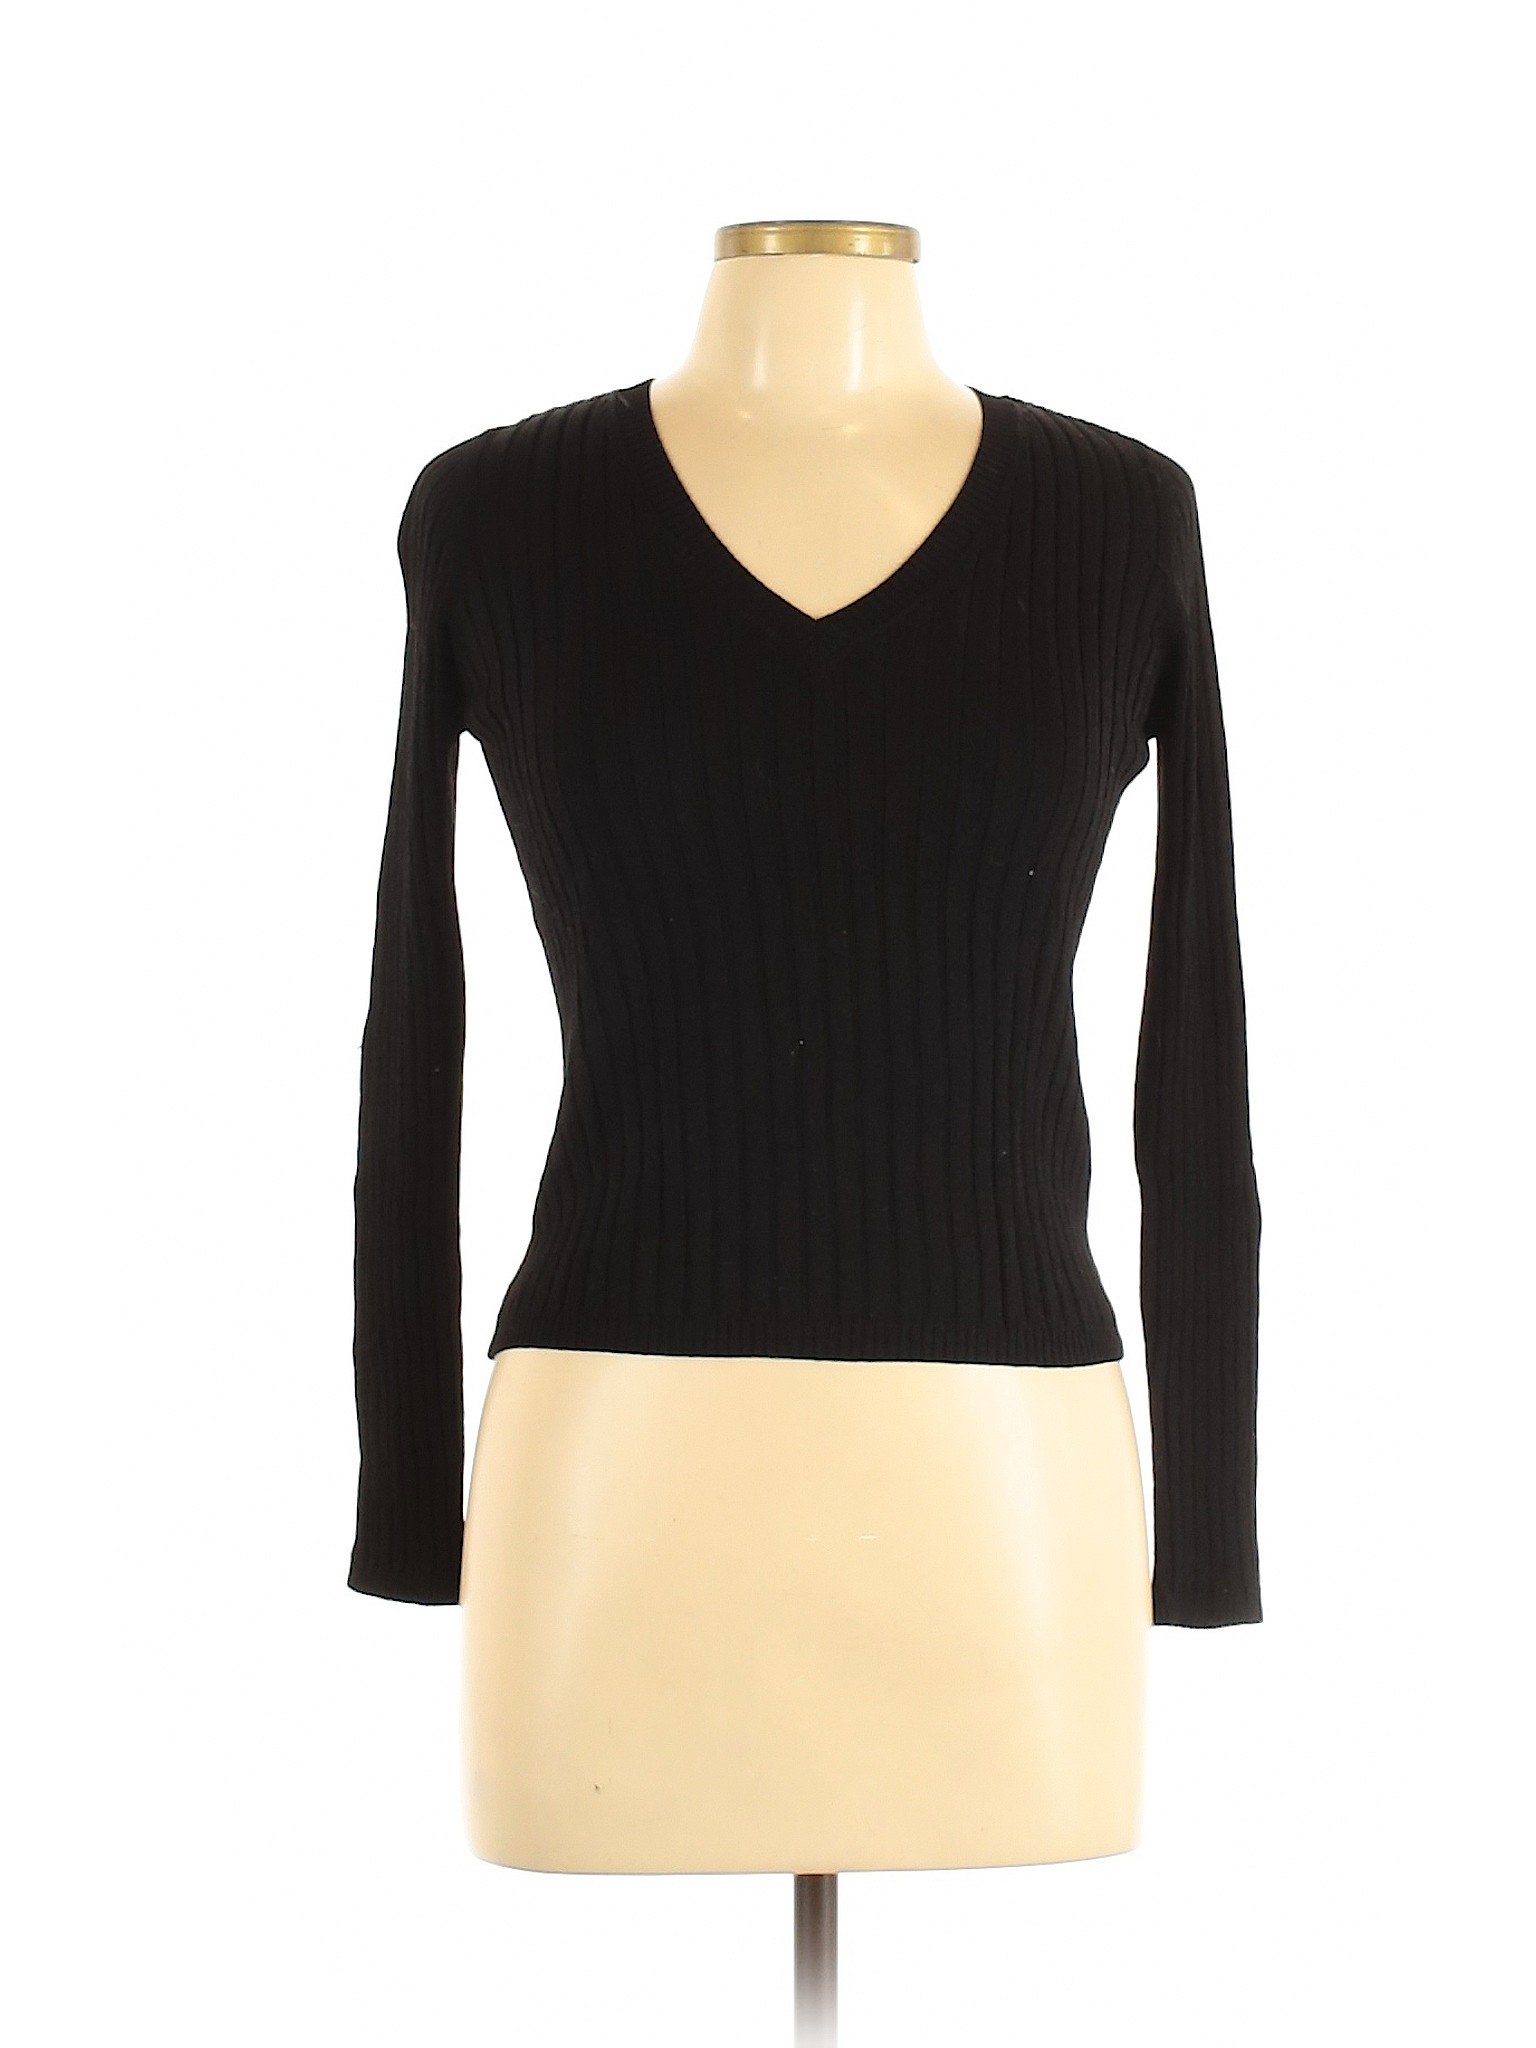 Zara Women Black Long Sleeve Top L | eBay